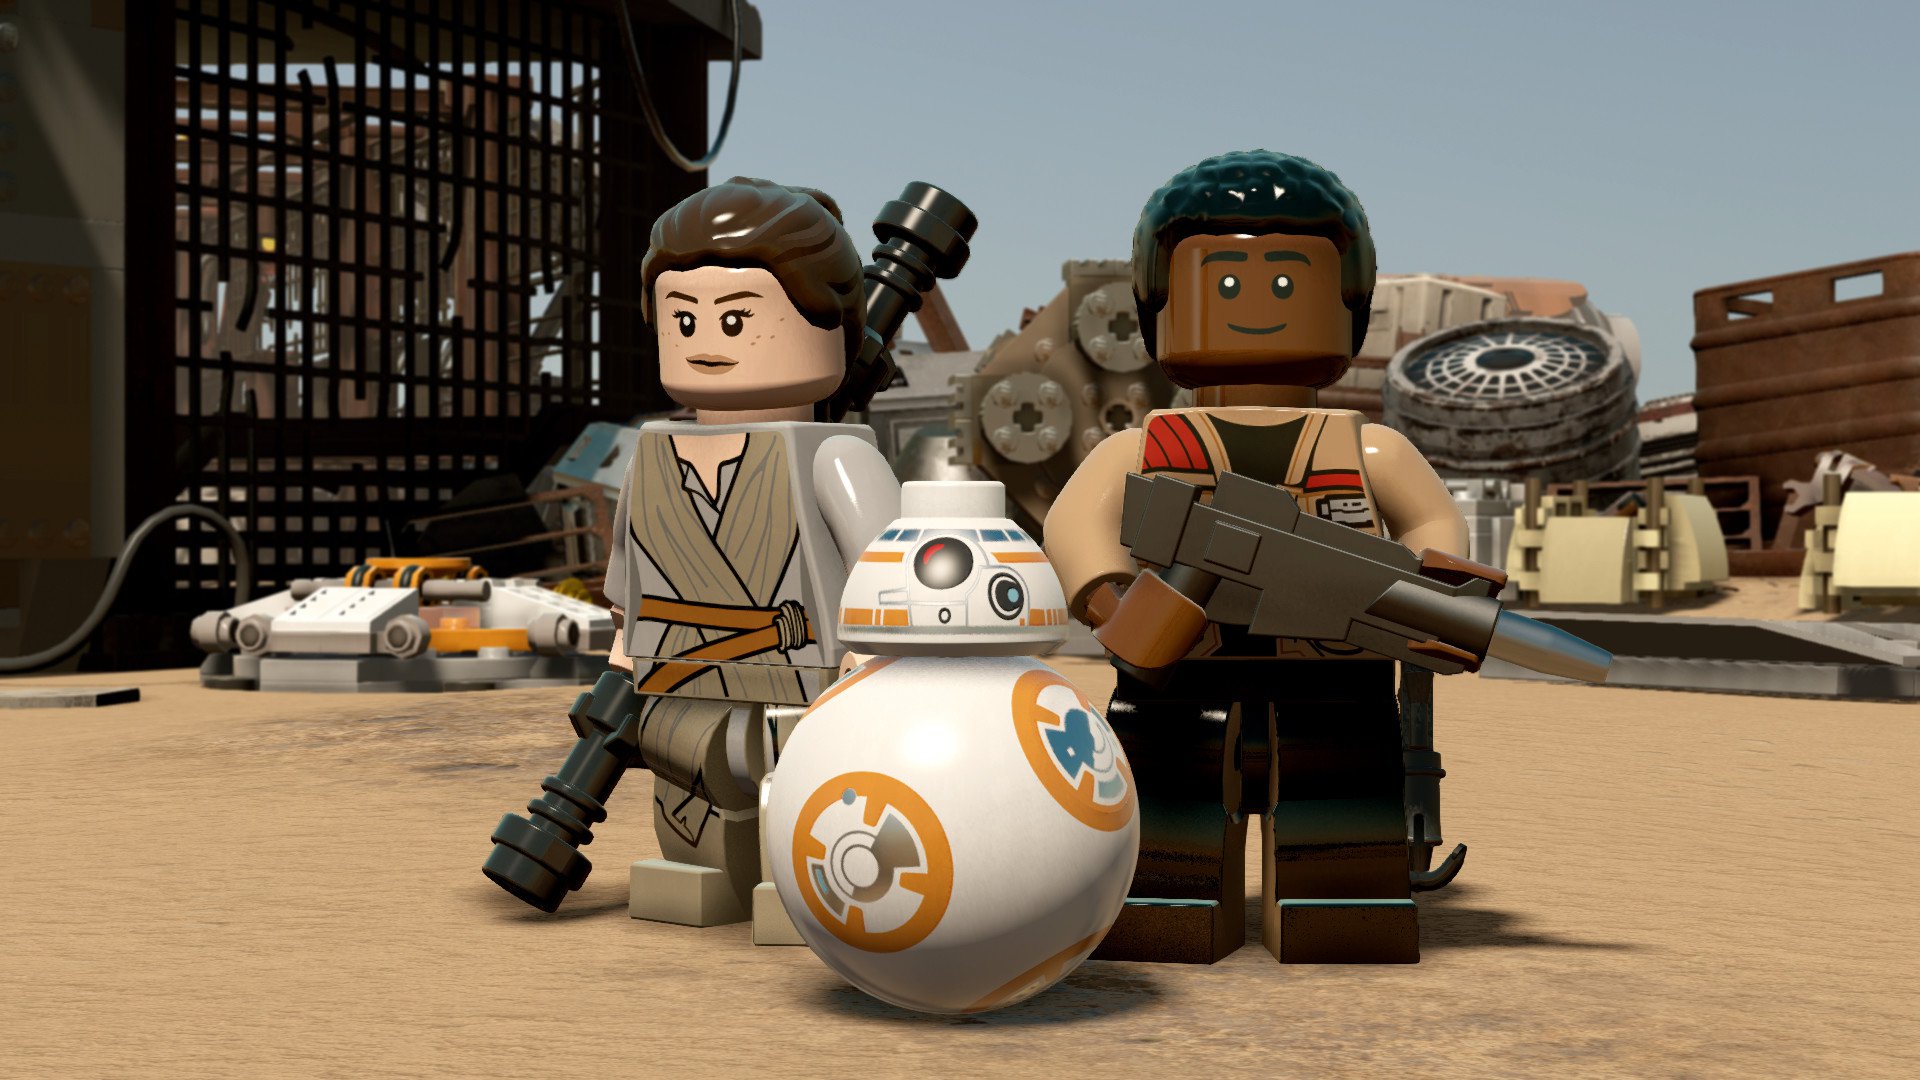 LEGO Star Wars The Force Awakens 2